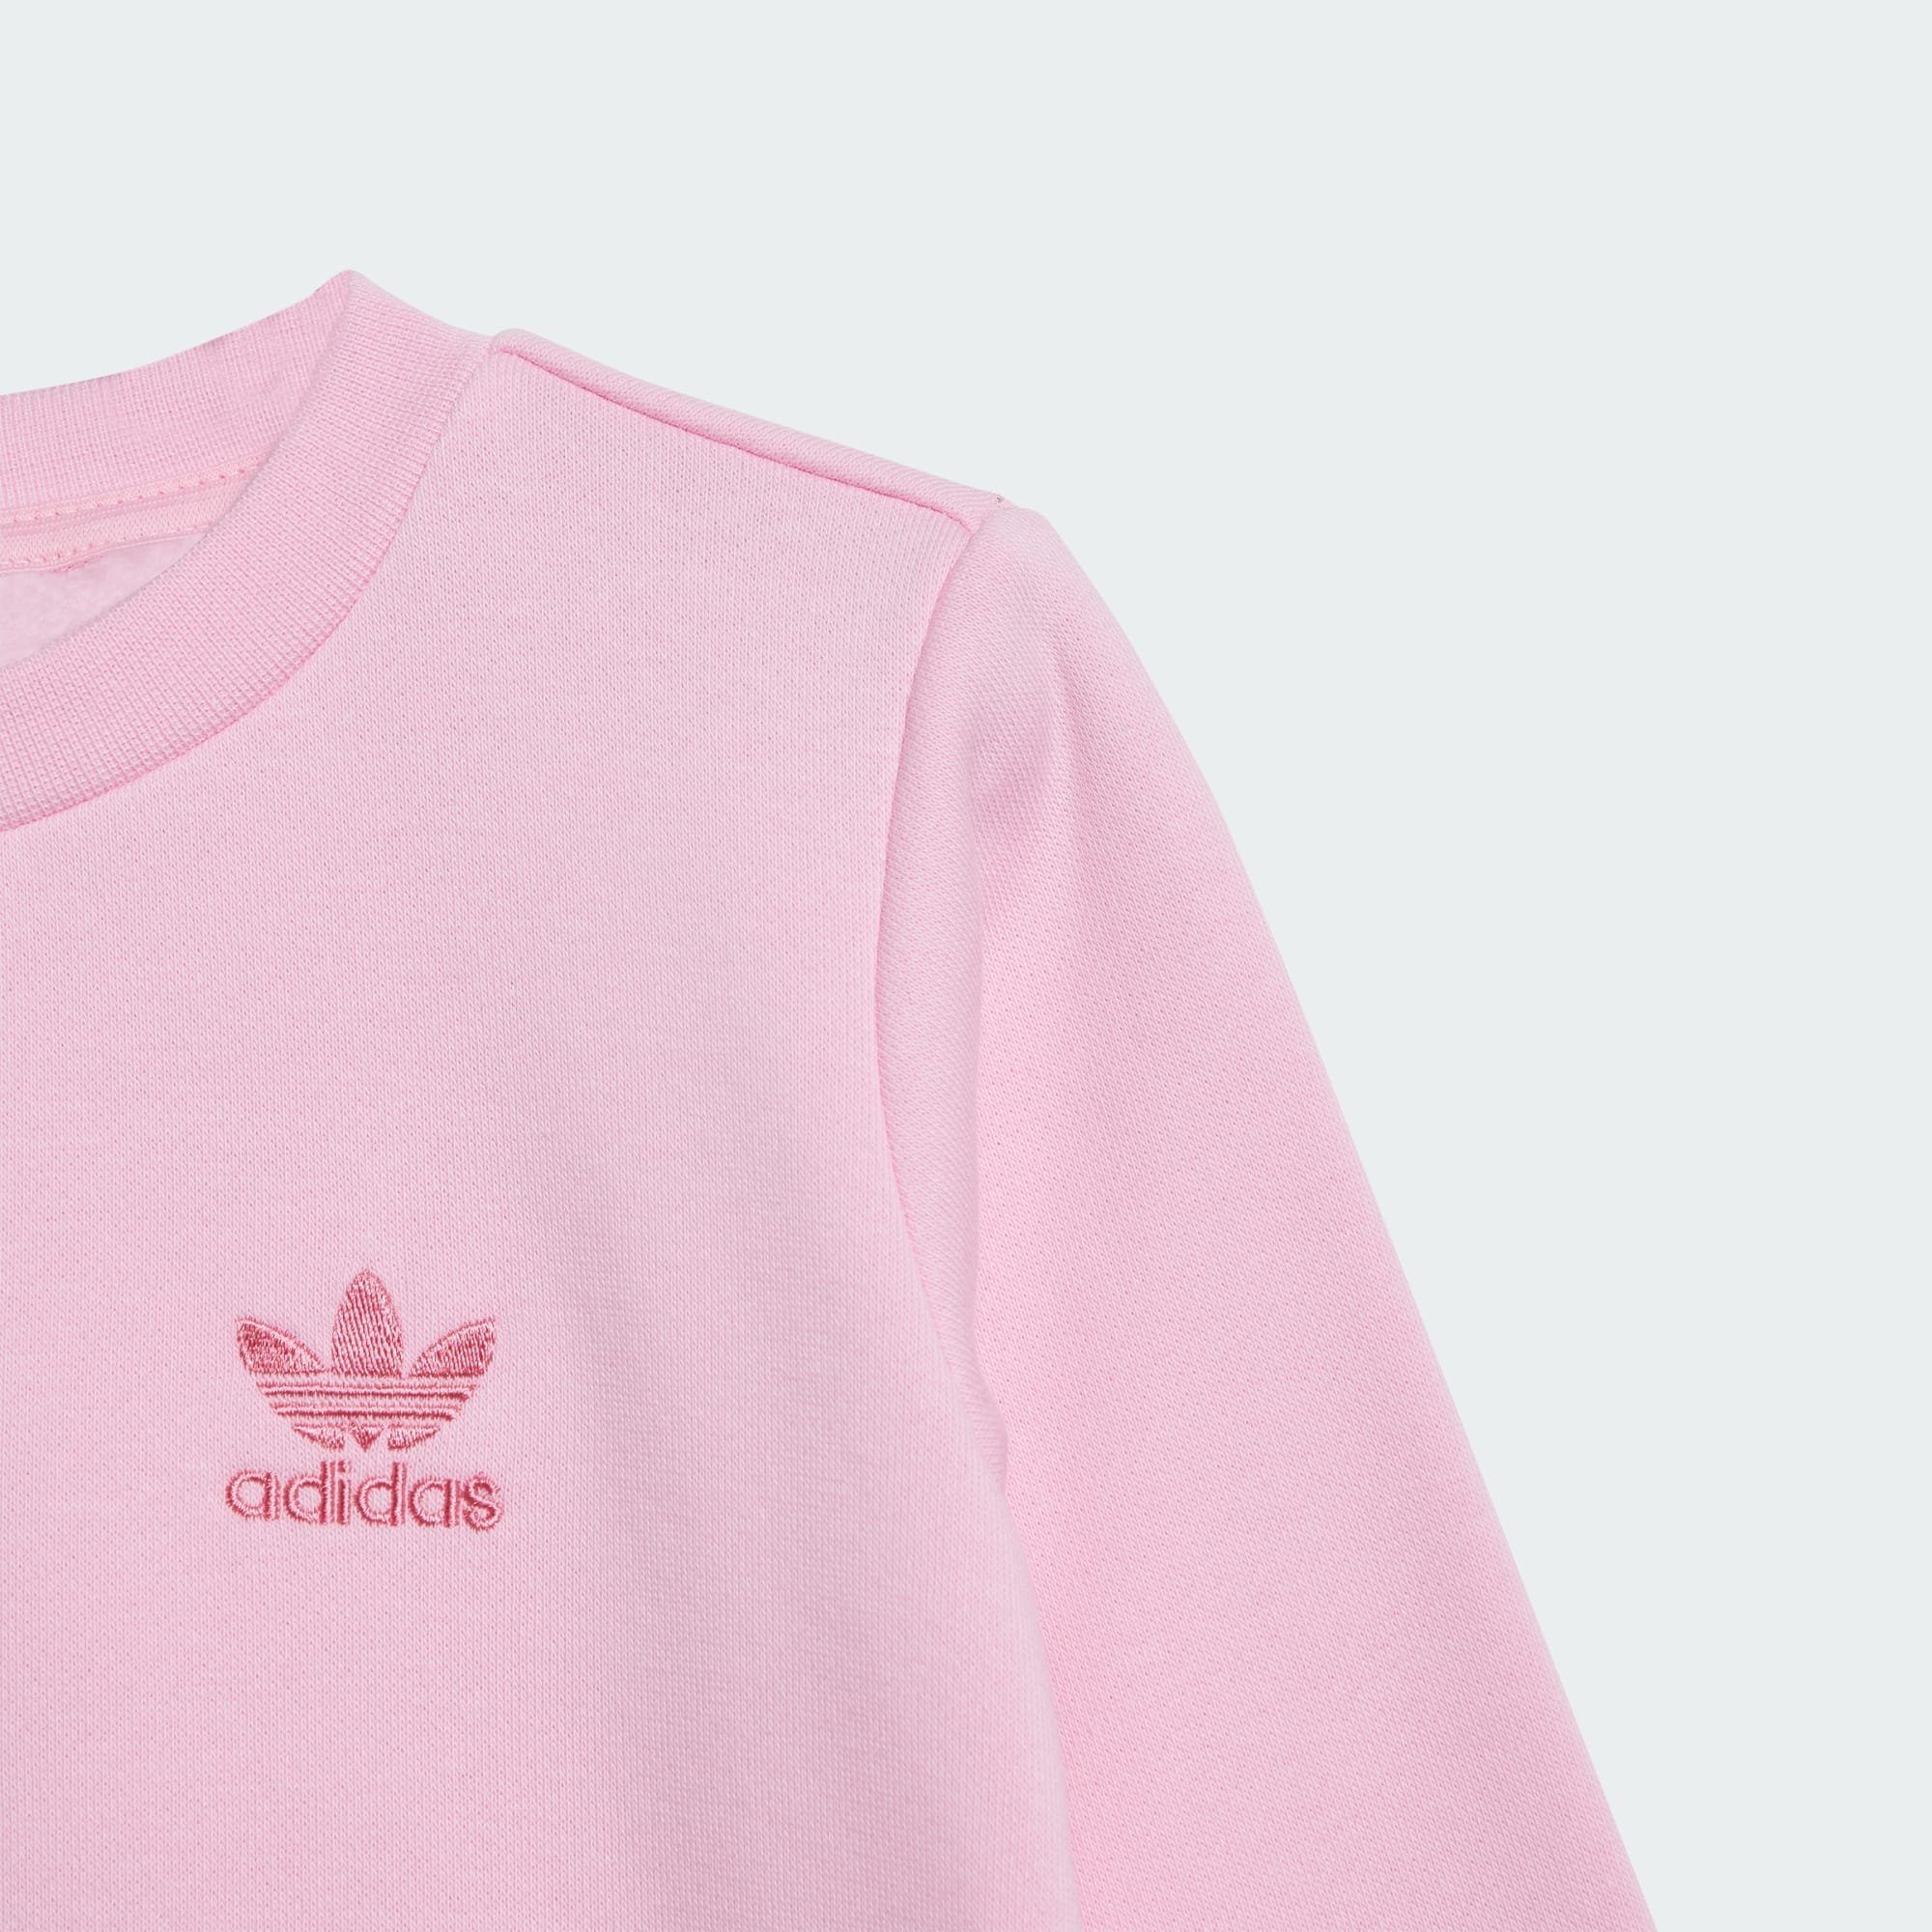 adidas Originals Trainingsanzug ADICOLOR True Pink SET